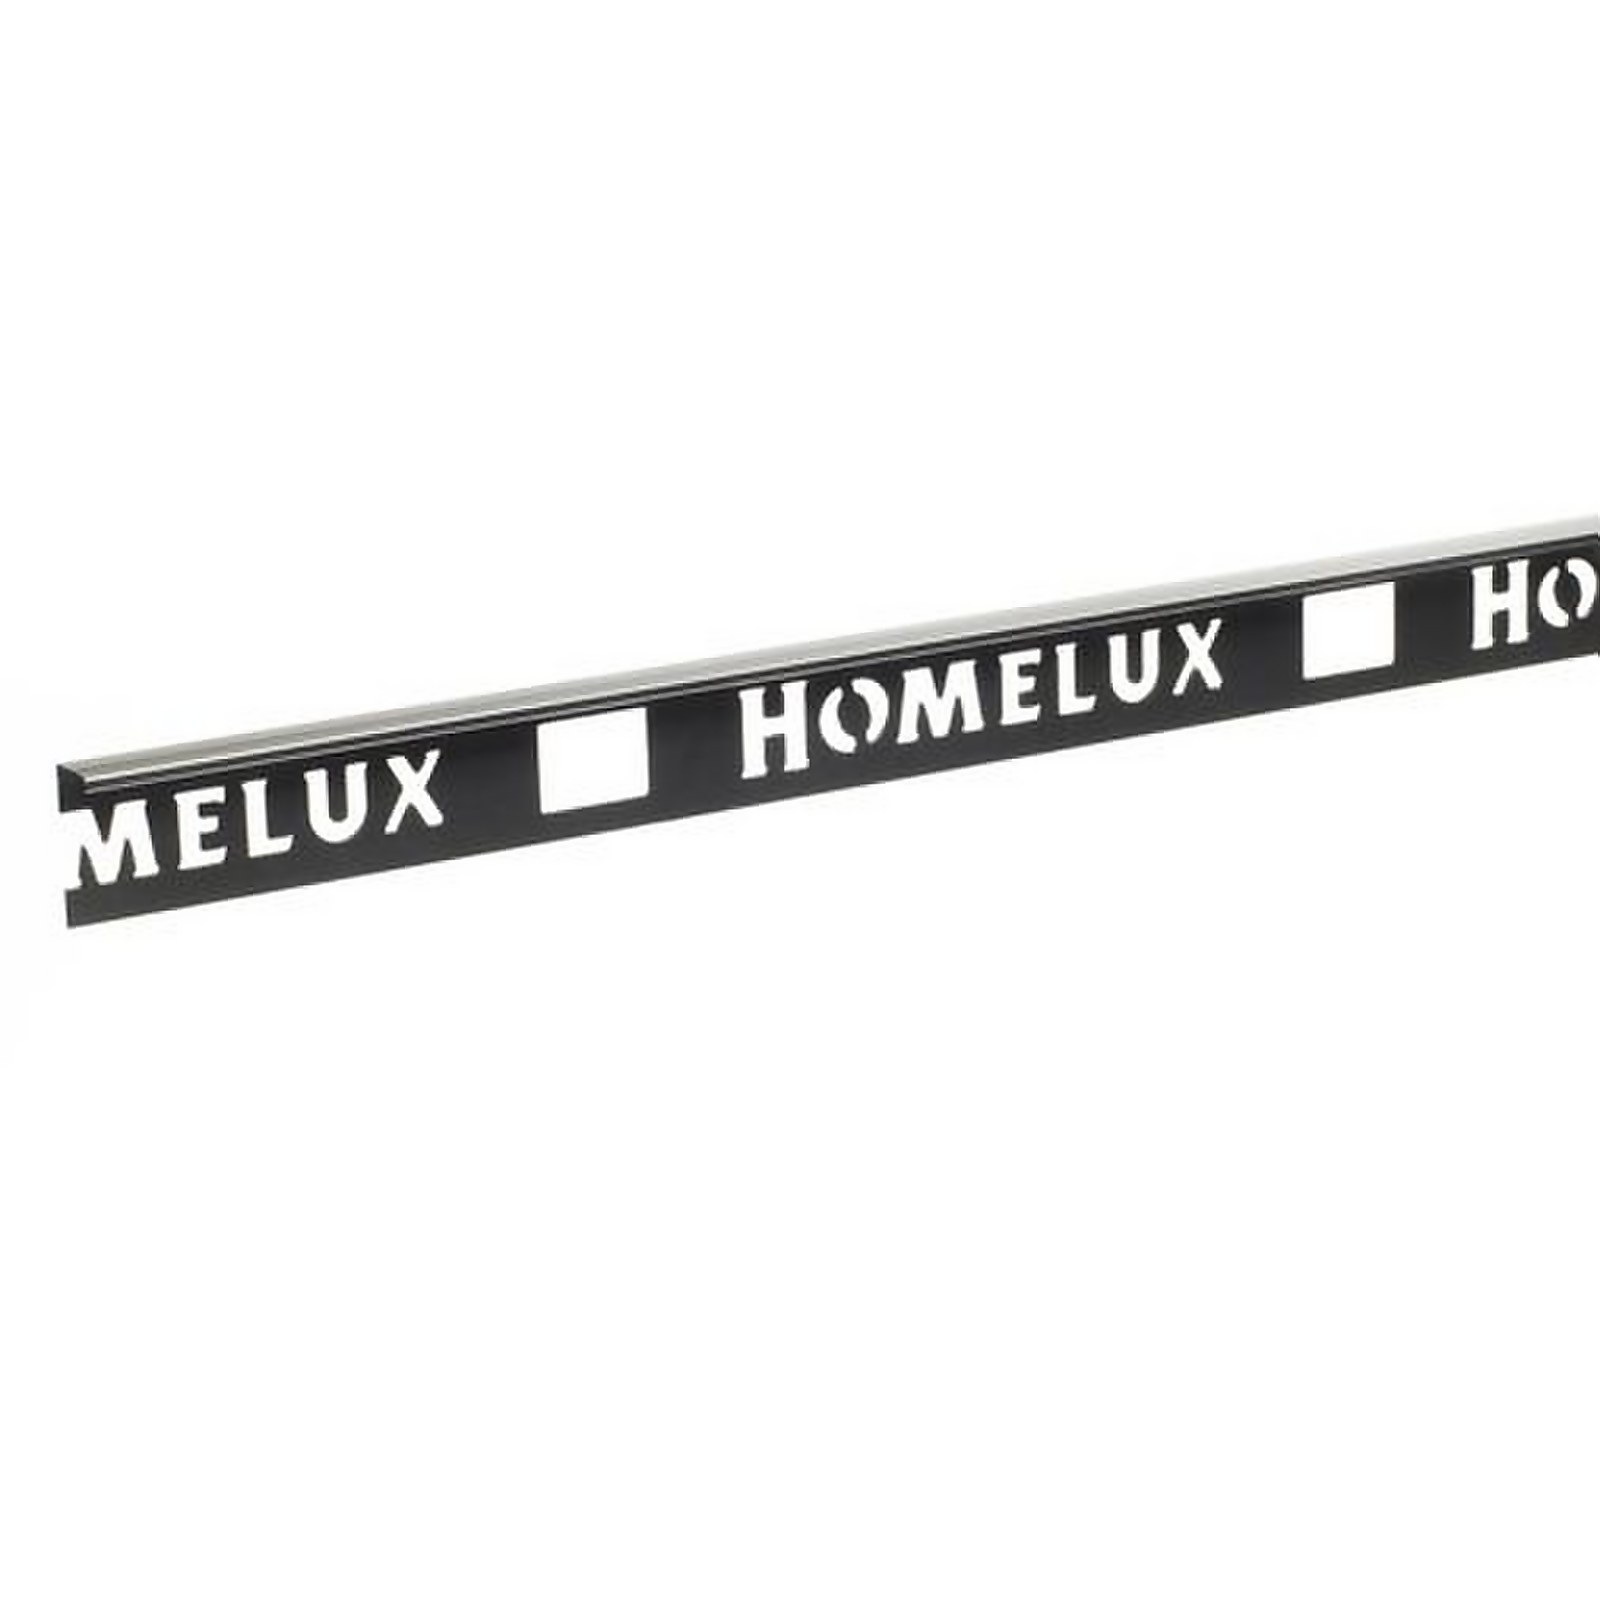 Photo of Homelux 10mm Straight Edge Tile Trim - Gun Metal Grey - 1.83m